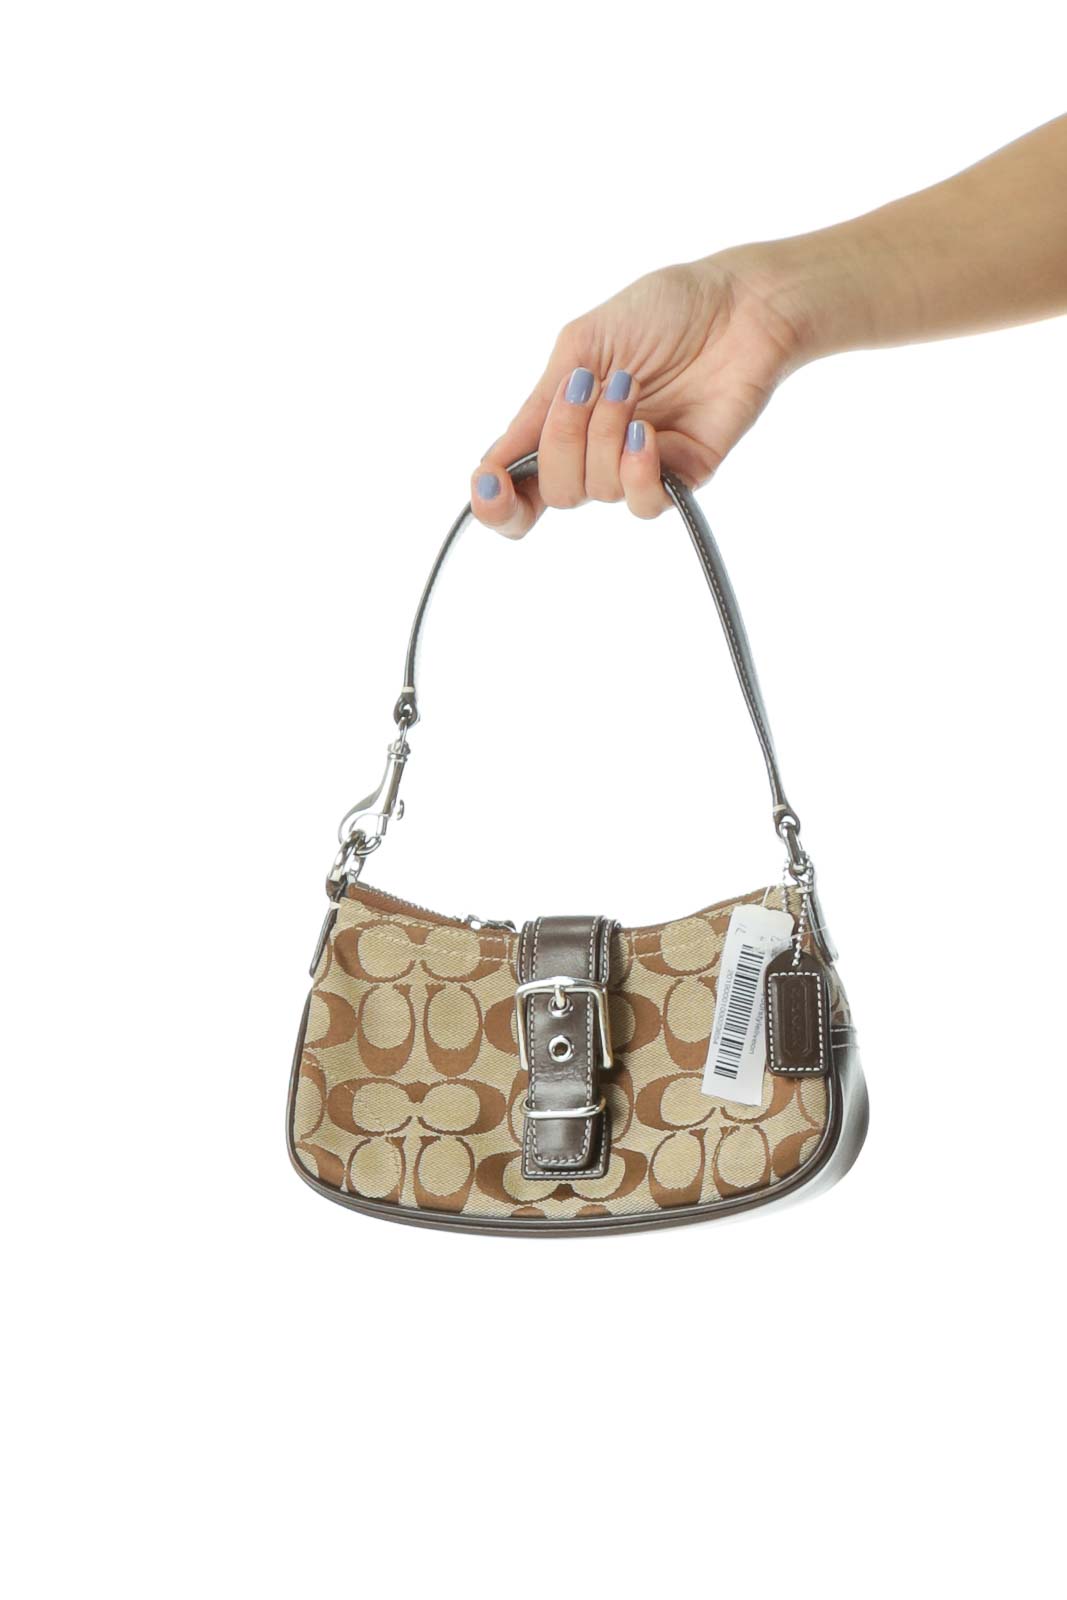 Brown coach purse - Women's handbags